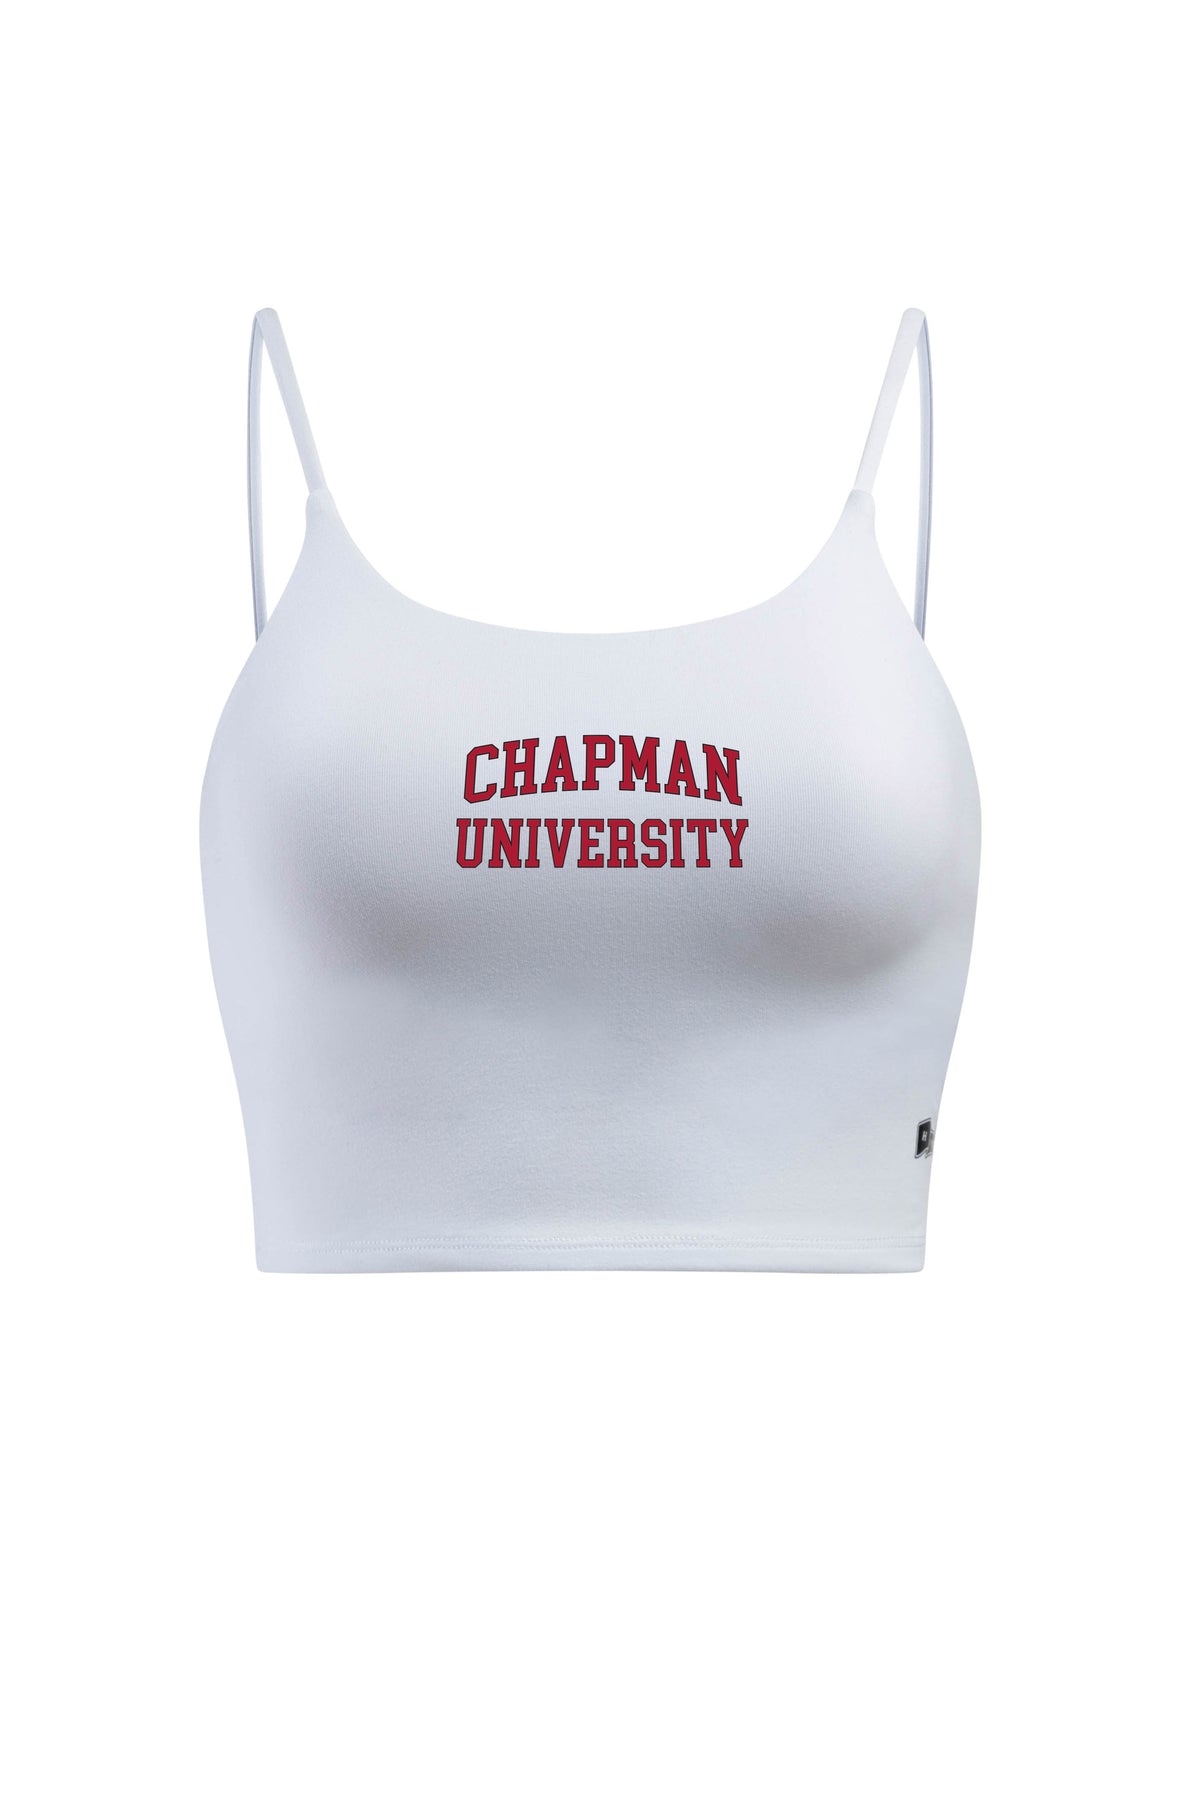 Chapman University Bra Tank Top